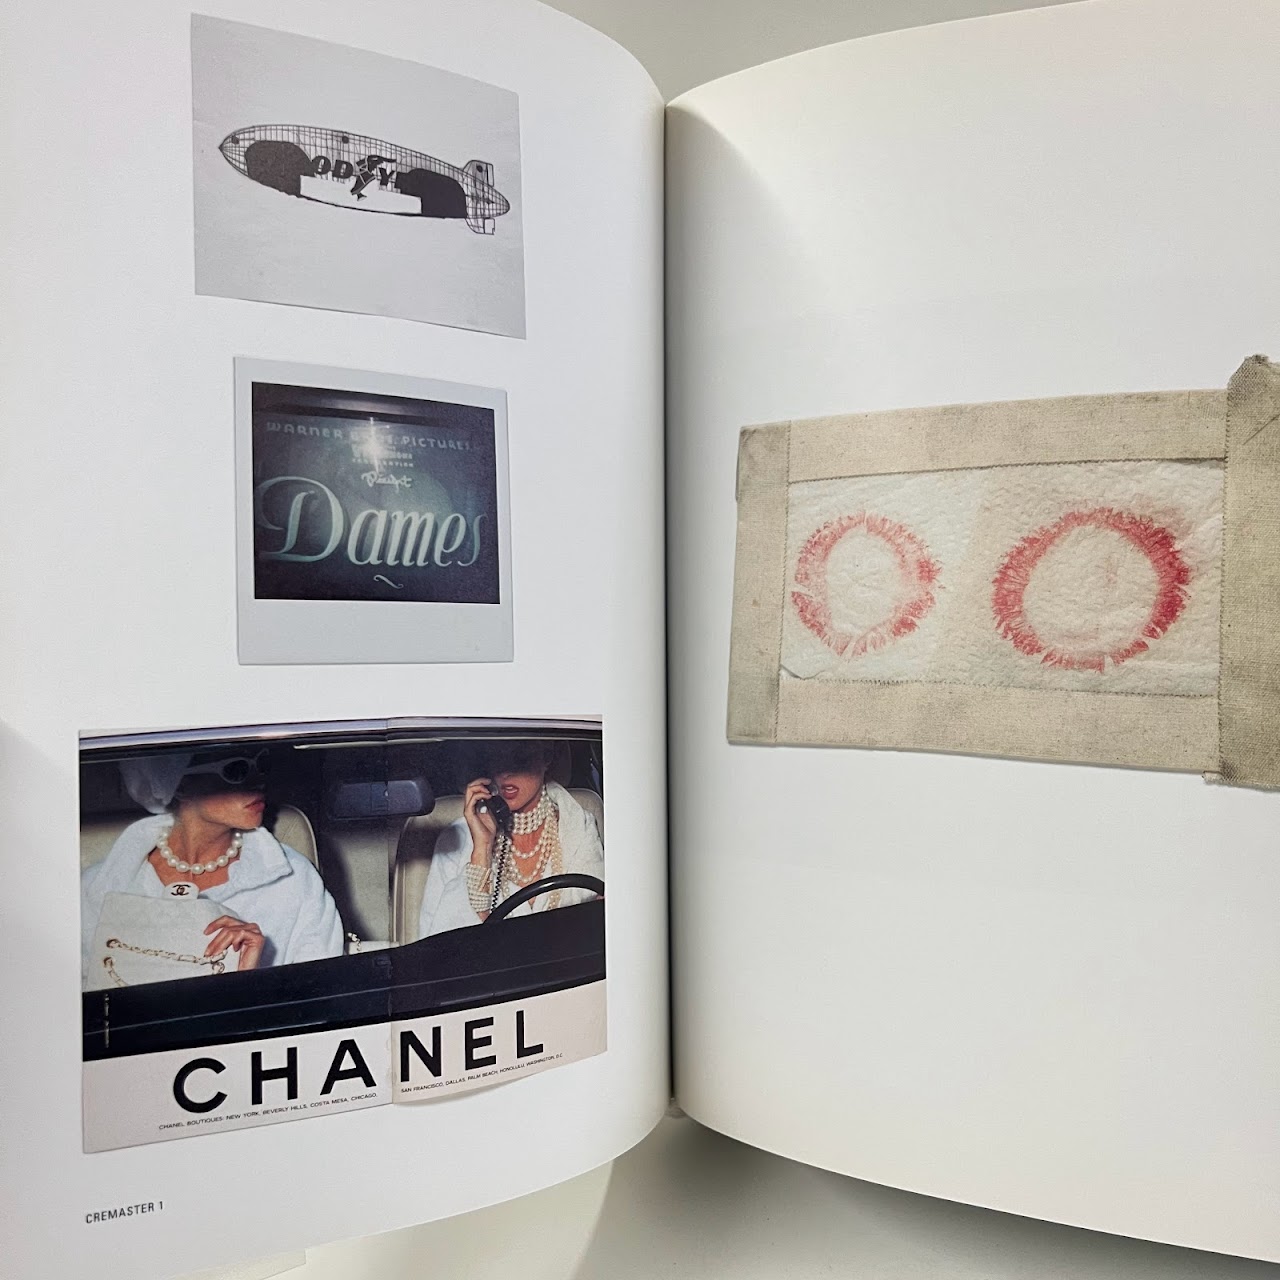 Matthew Barney: The Cremaster Cycle Book